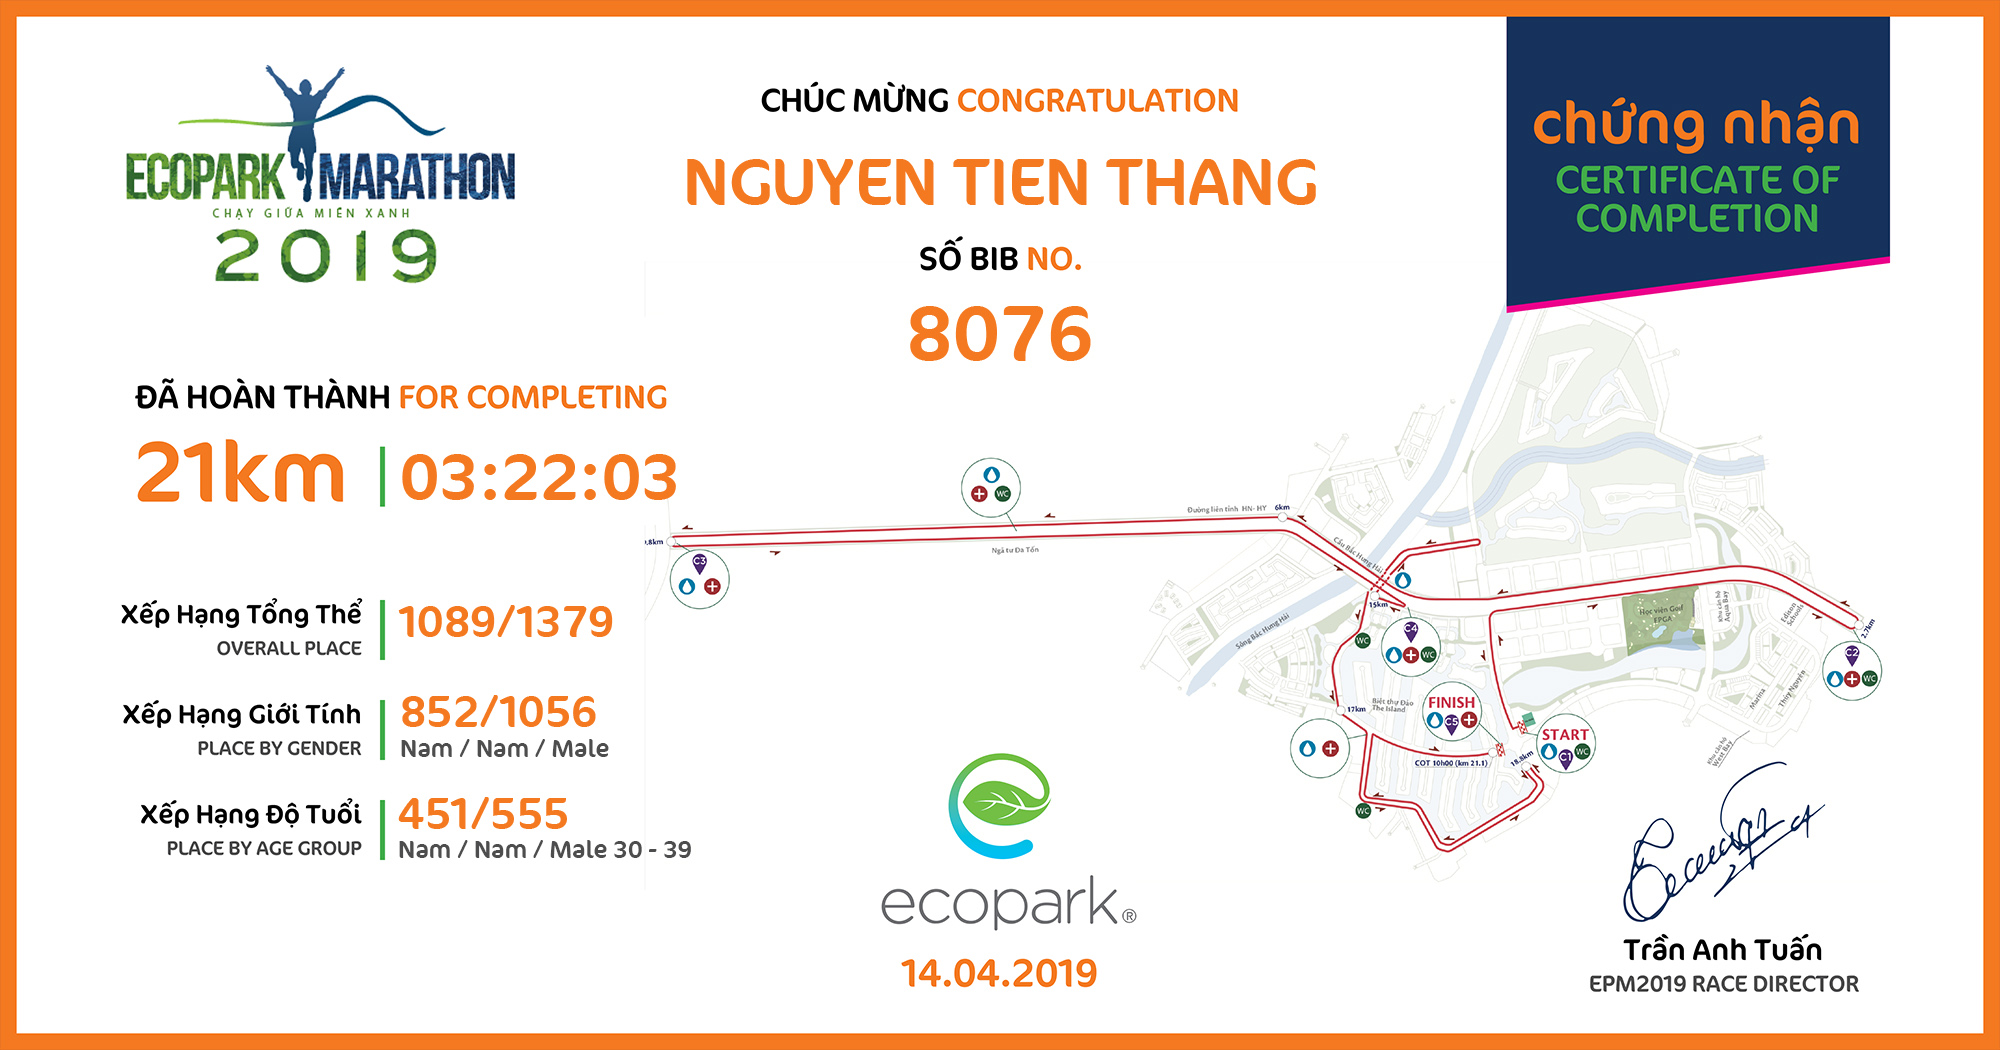 8076 - Nguyen Tien Thang